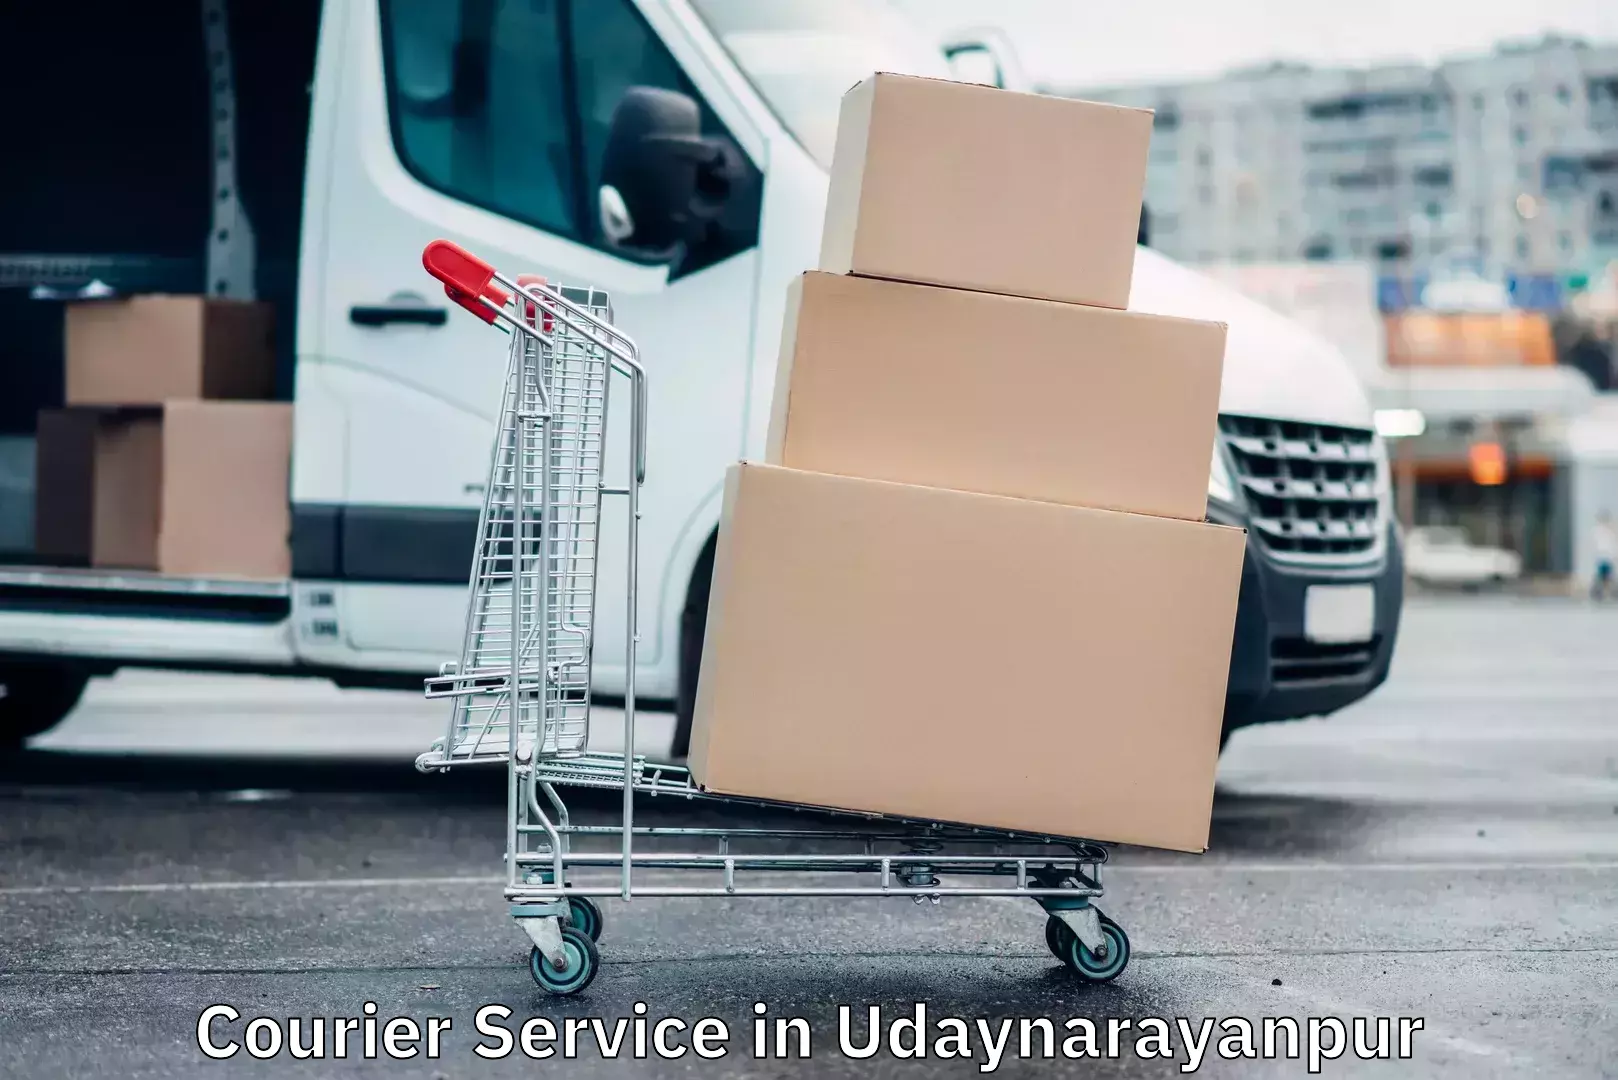 Efficient parcel service in Udaynarayanpur